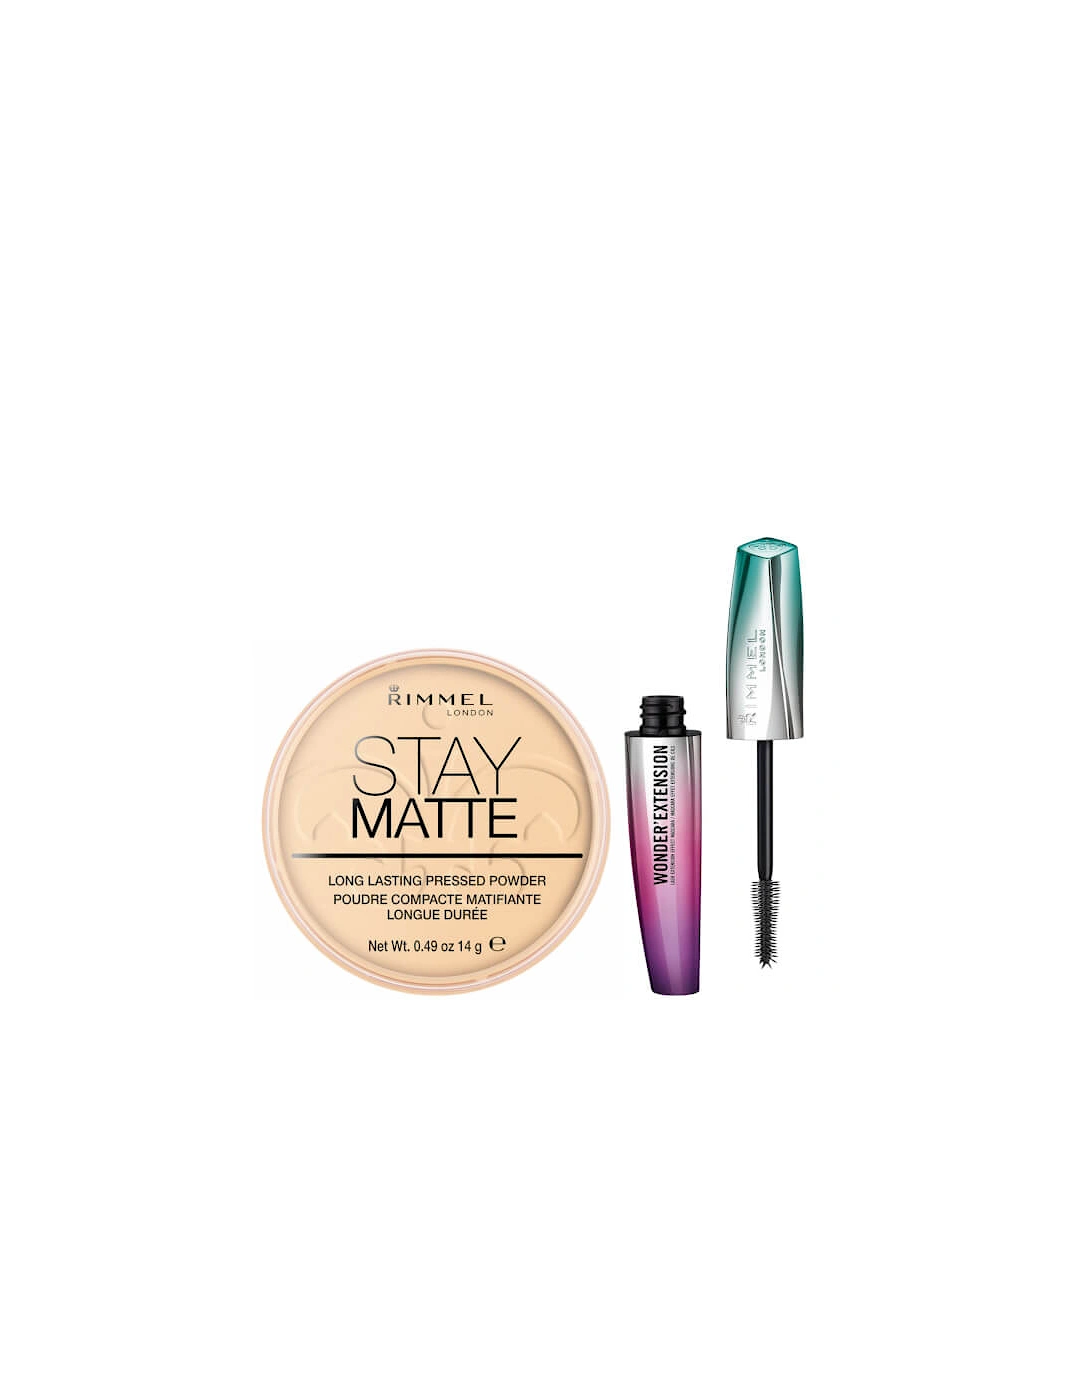 Stay Matte Pressed Powder and Wonder Extension Mascara Bundle, 2 of 1